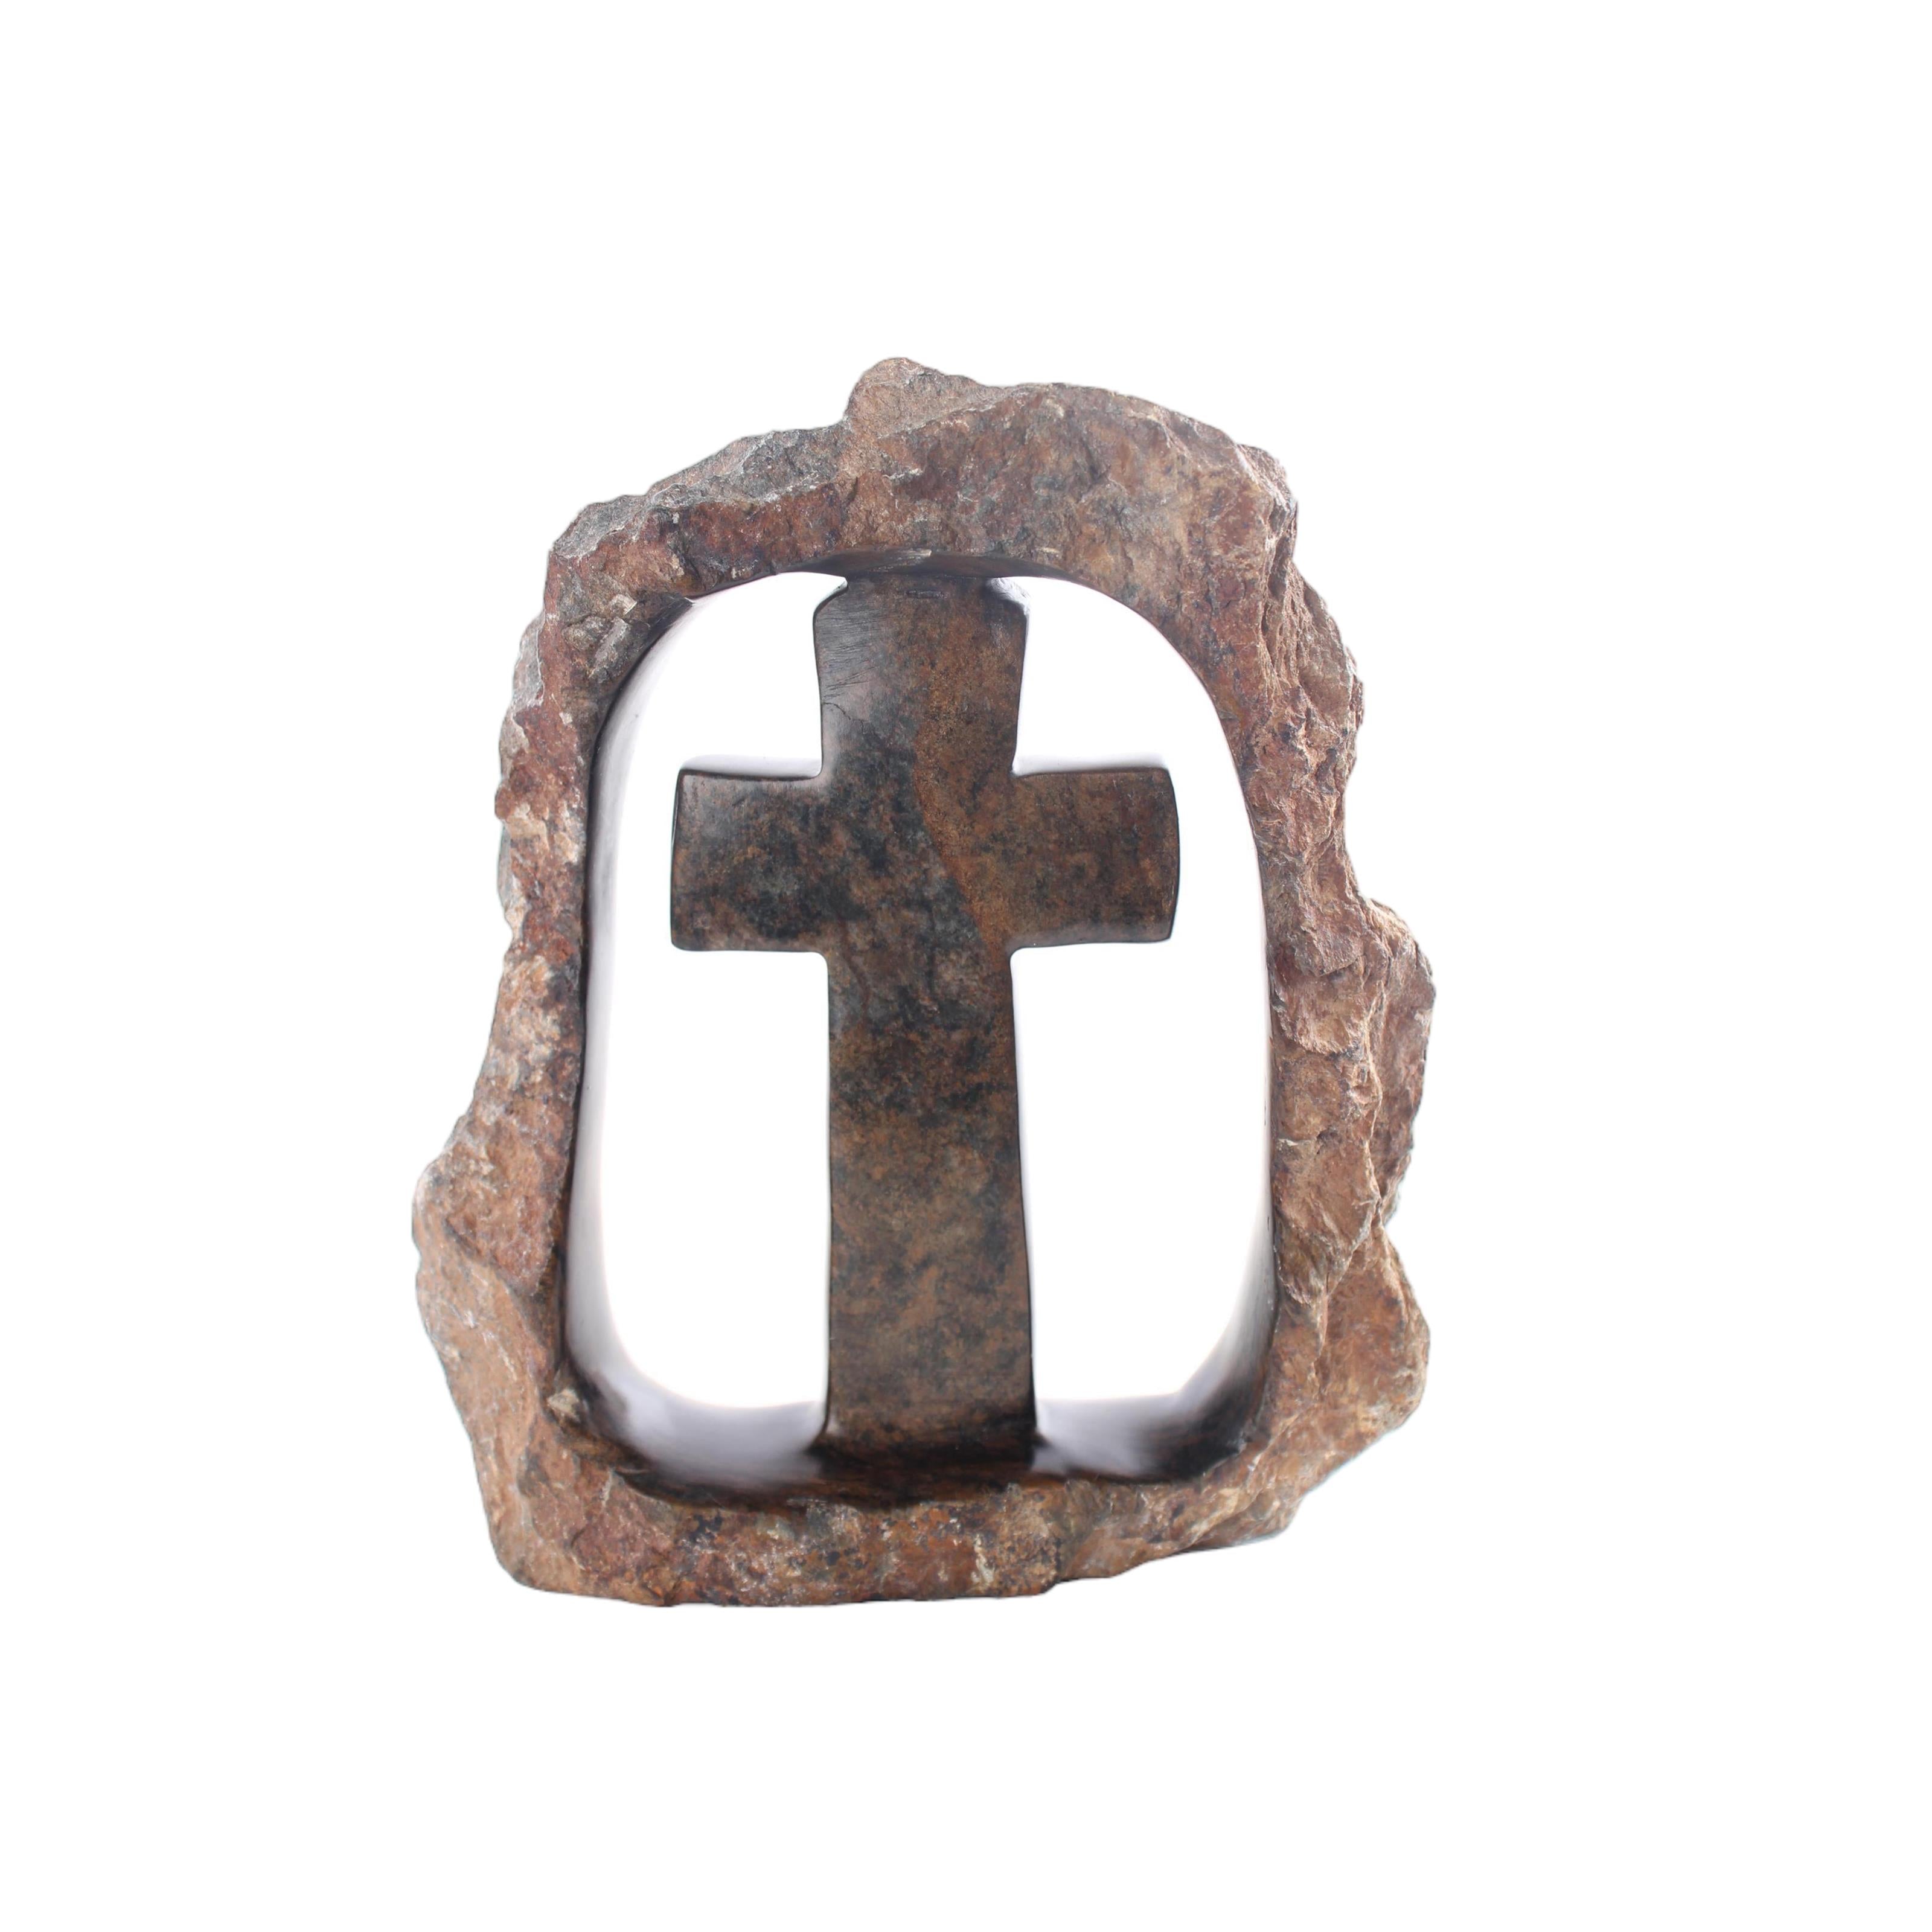 Shona Tribe Serpentine Stone Crosses  ~8.3" Tall - Crosses